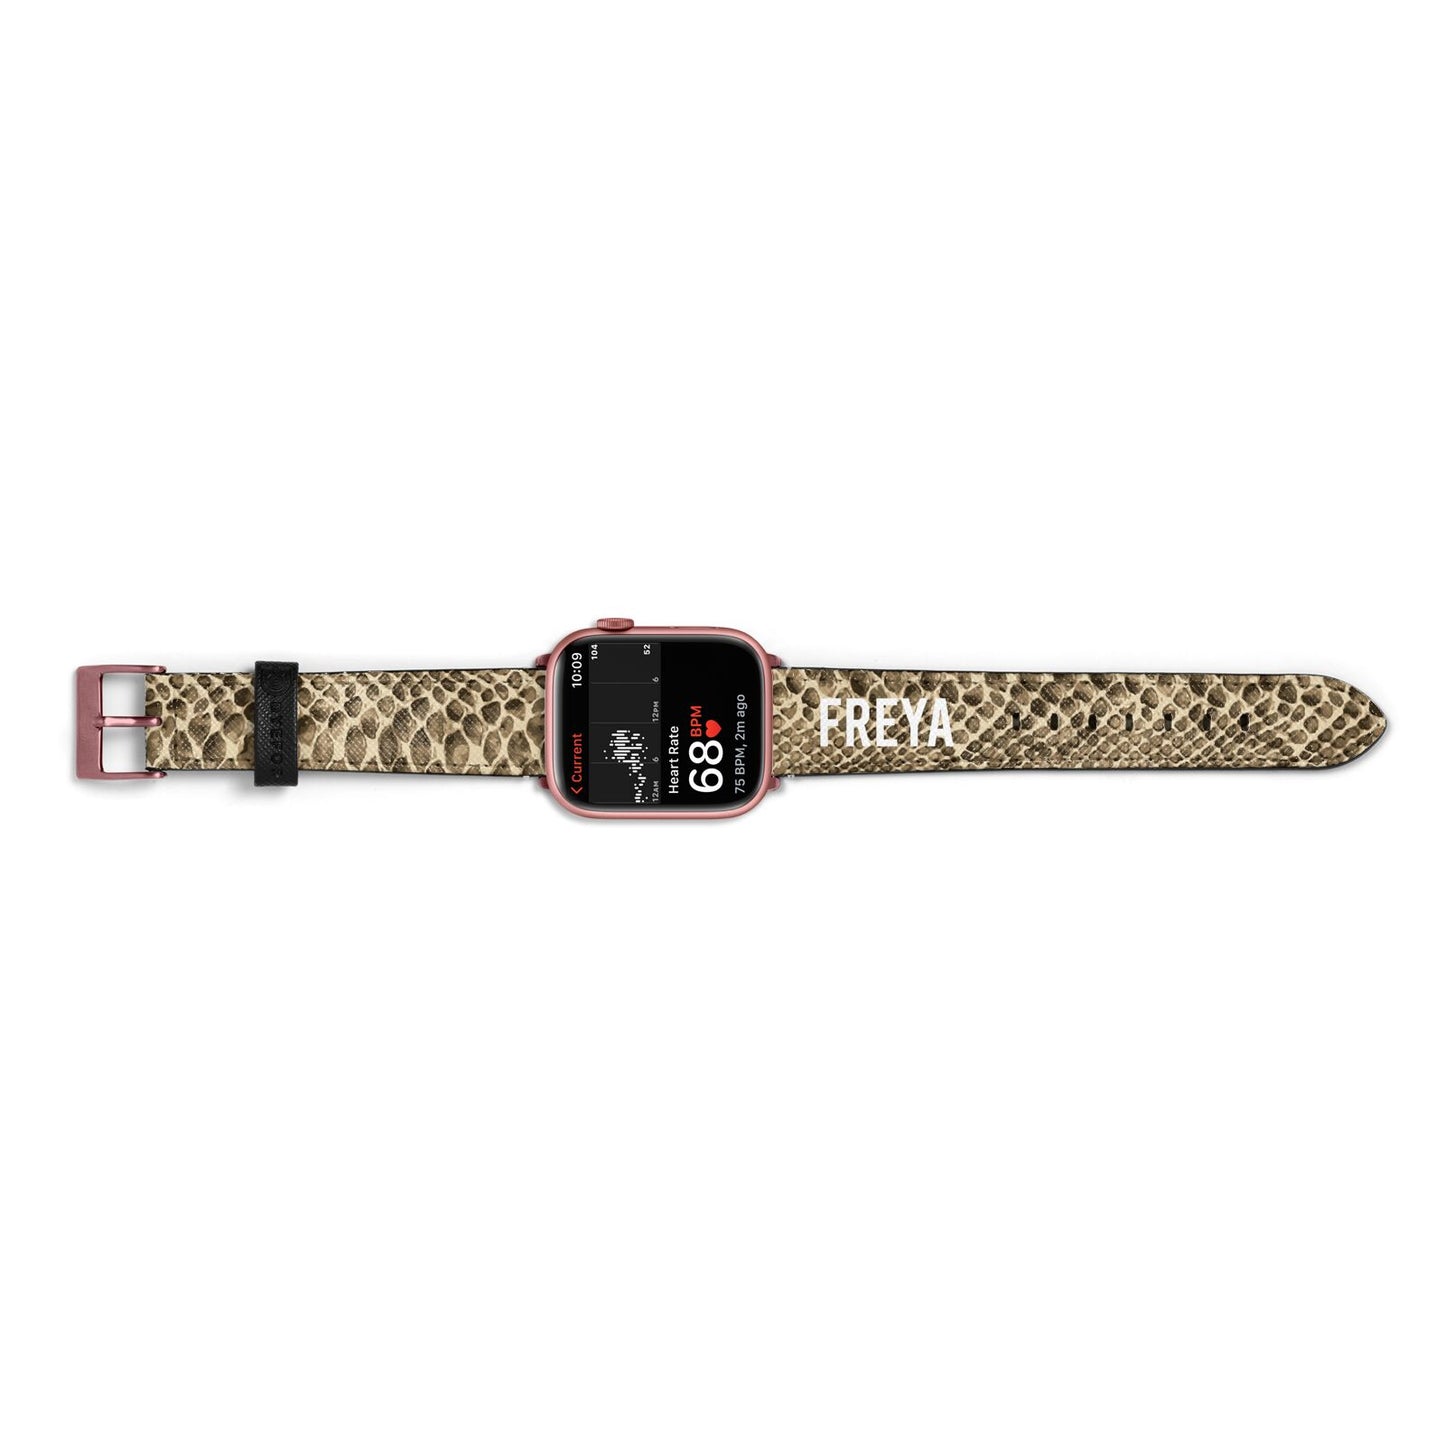 Personalised Tan Snakeskin Apple Watch Strap Size 38mm Landscape Image Rose Gold Hardware